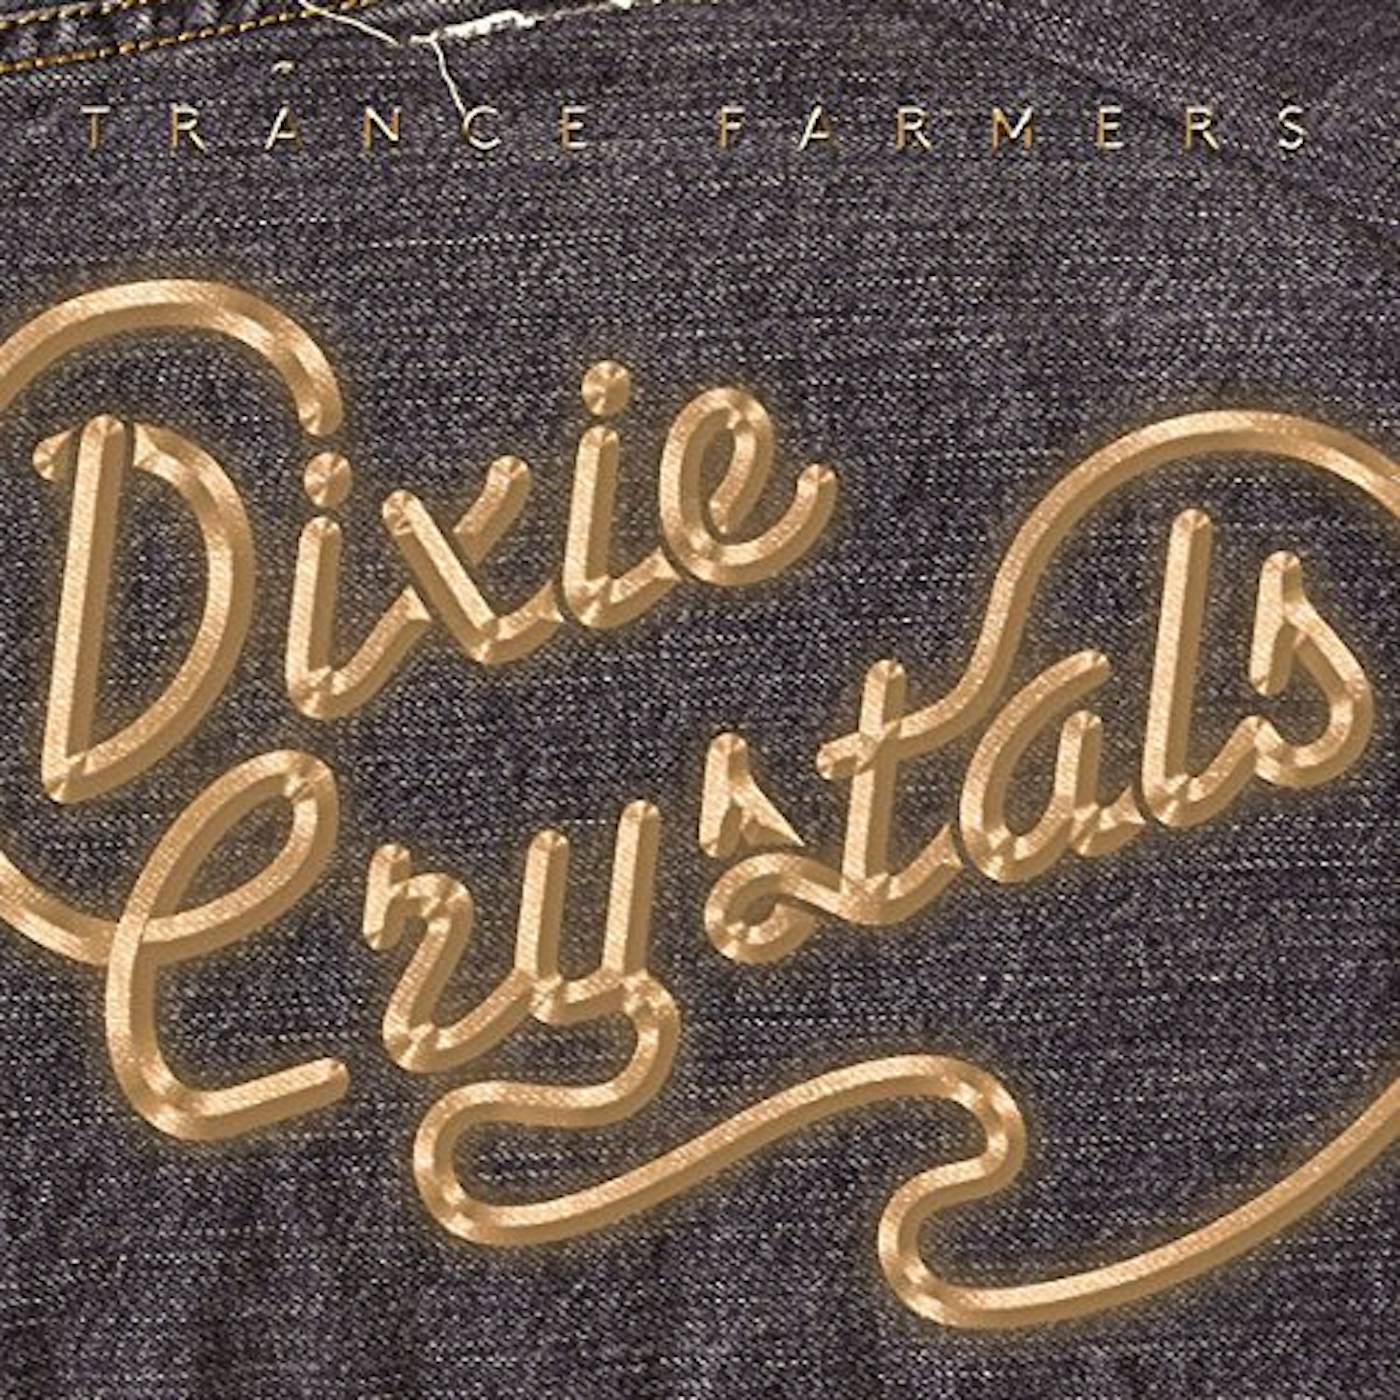 Trance Farmers Dixie Crystals Vinyl Record